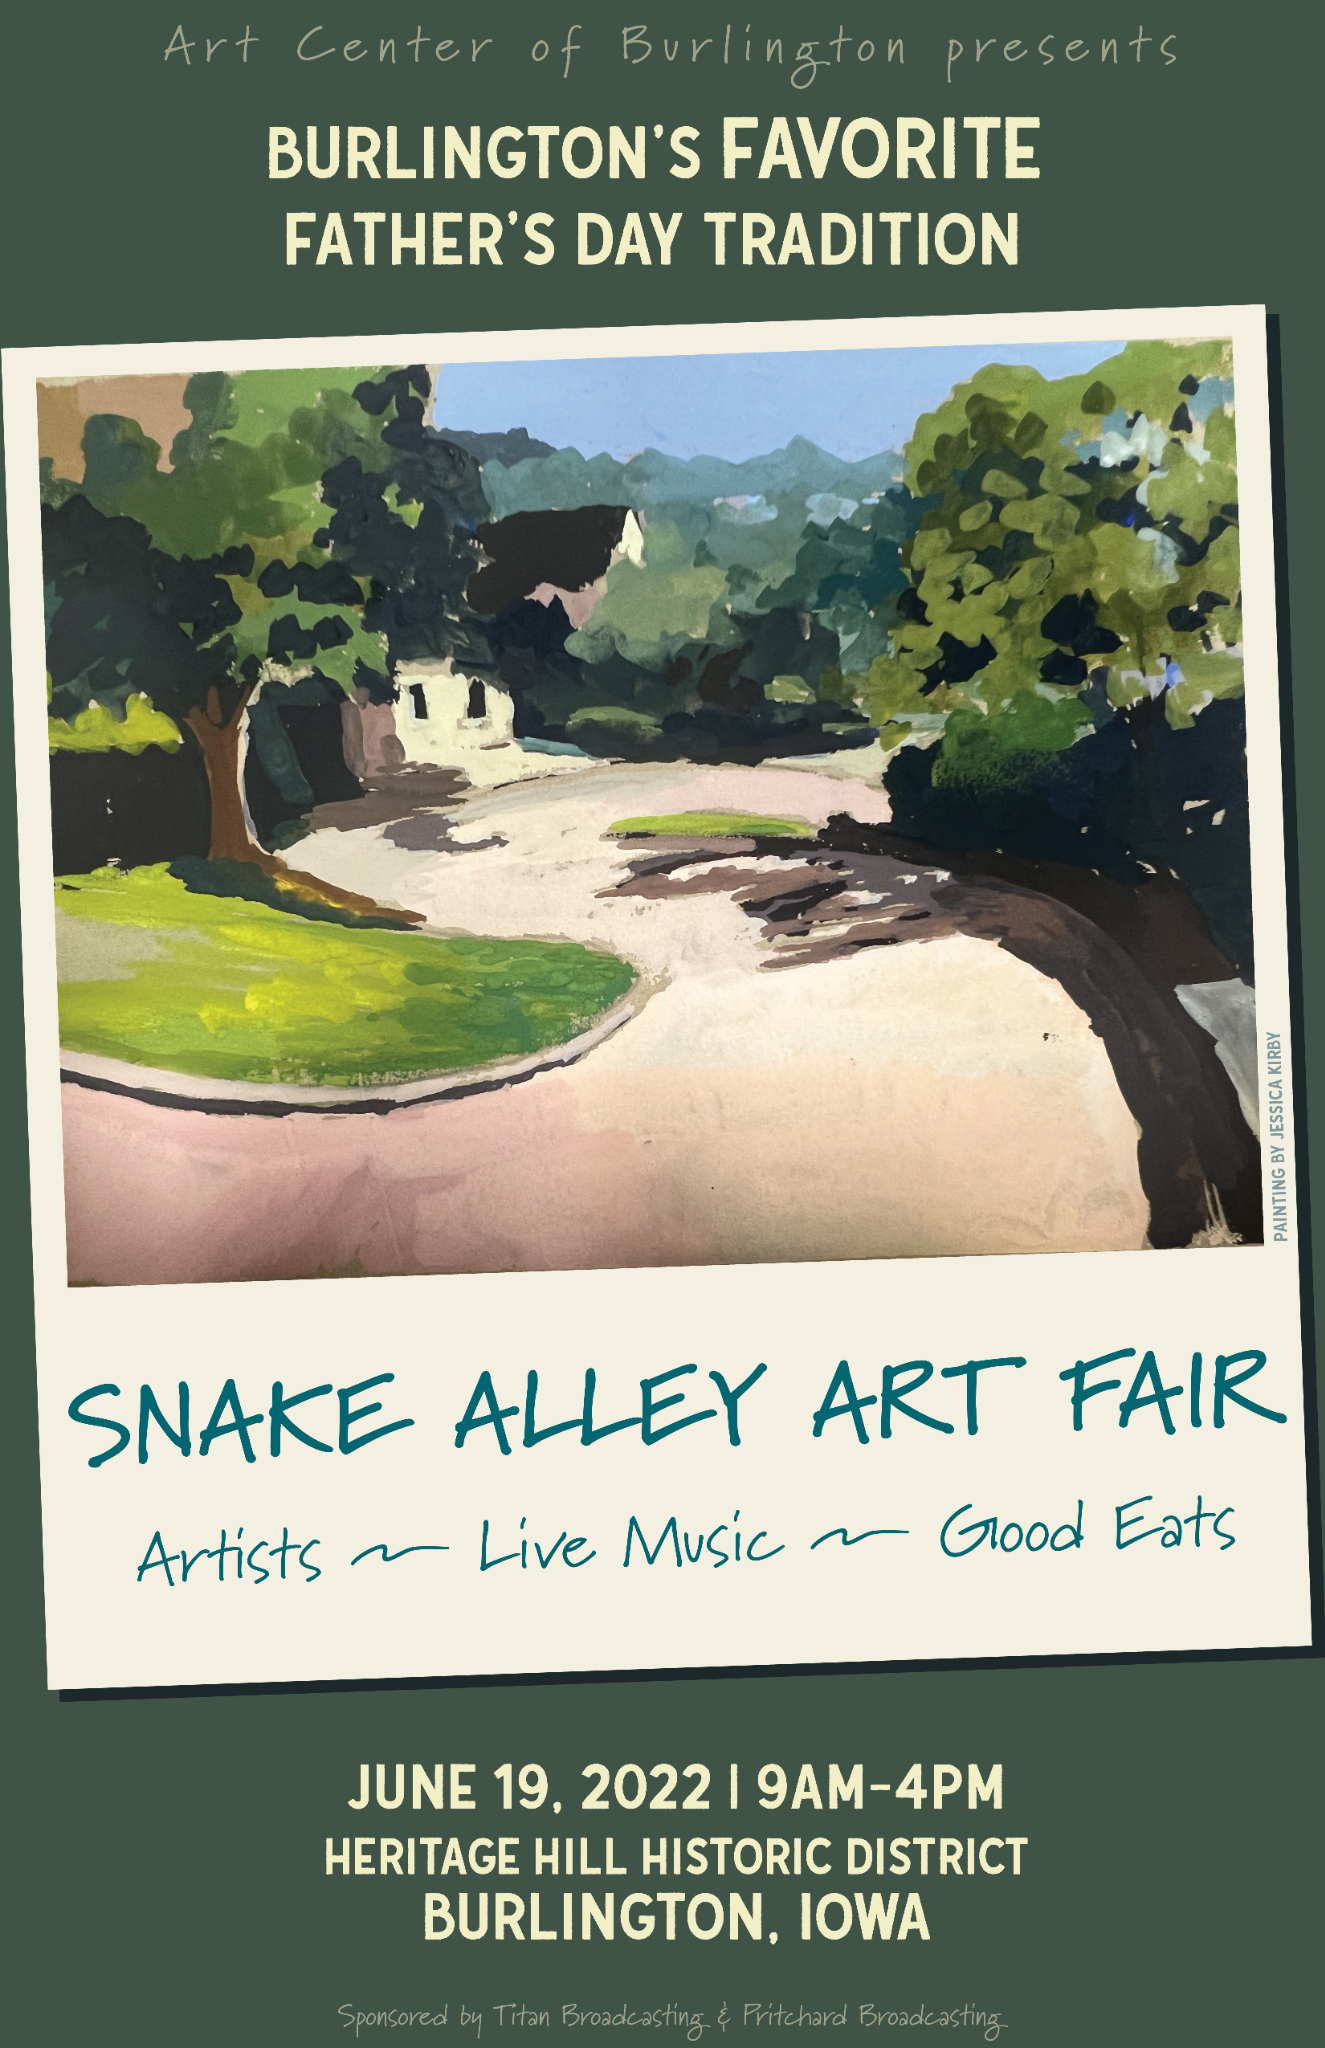 Snake Alley Art Fair